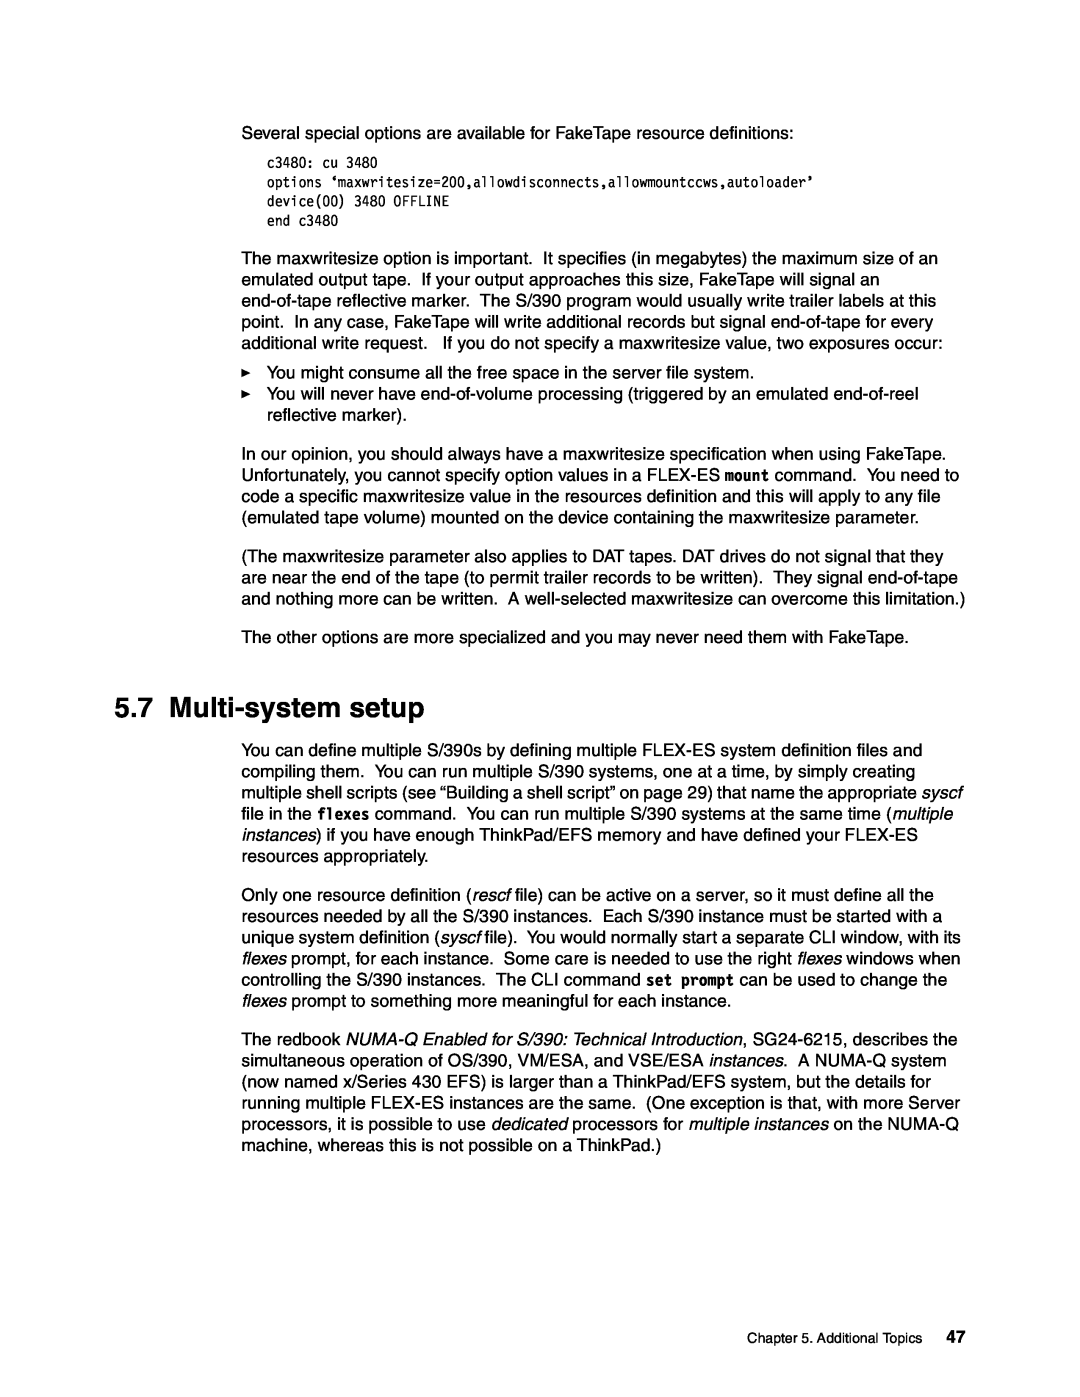 IBM s/390 manual Multi-system setup 